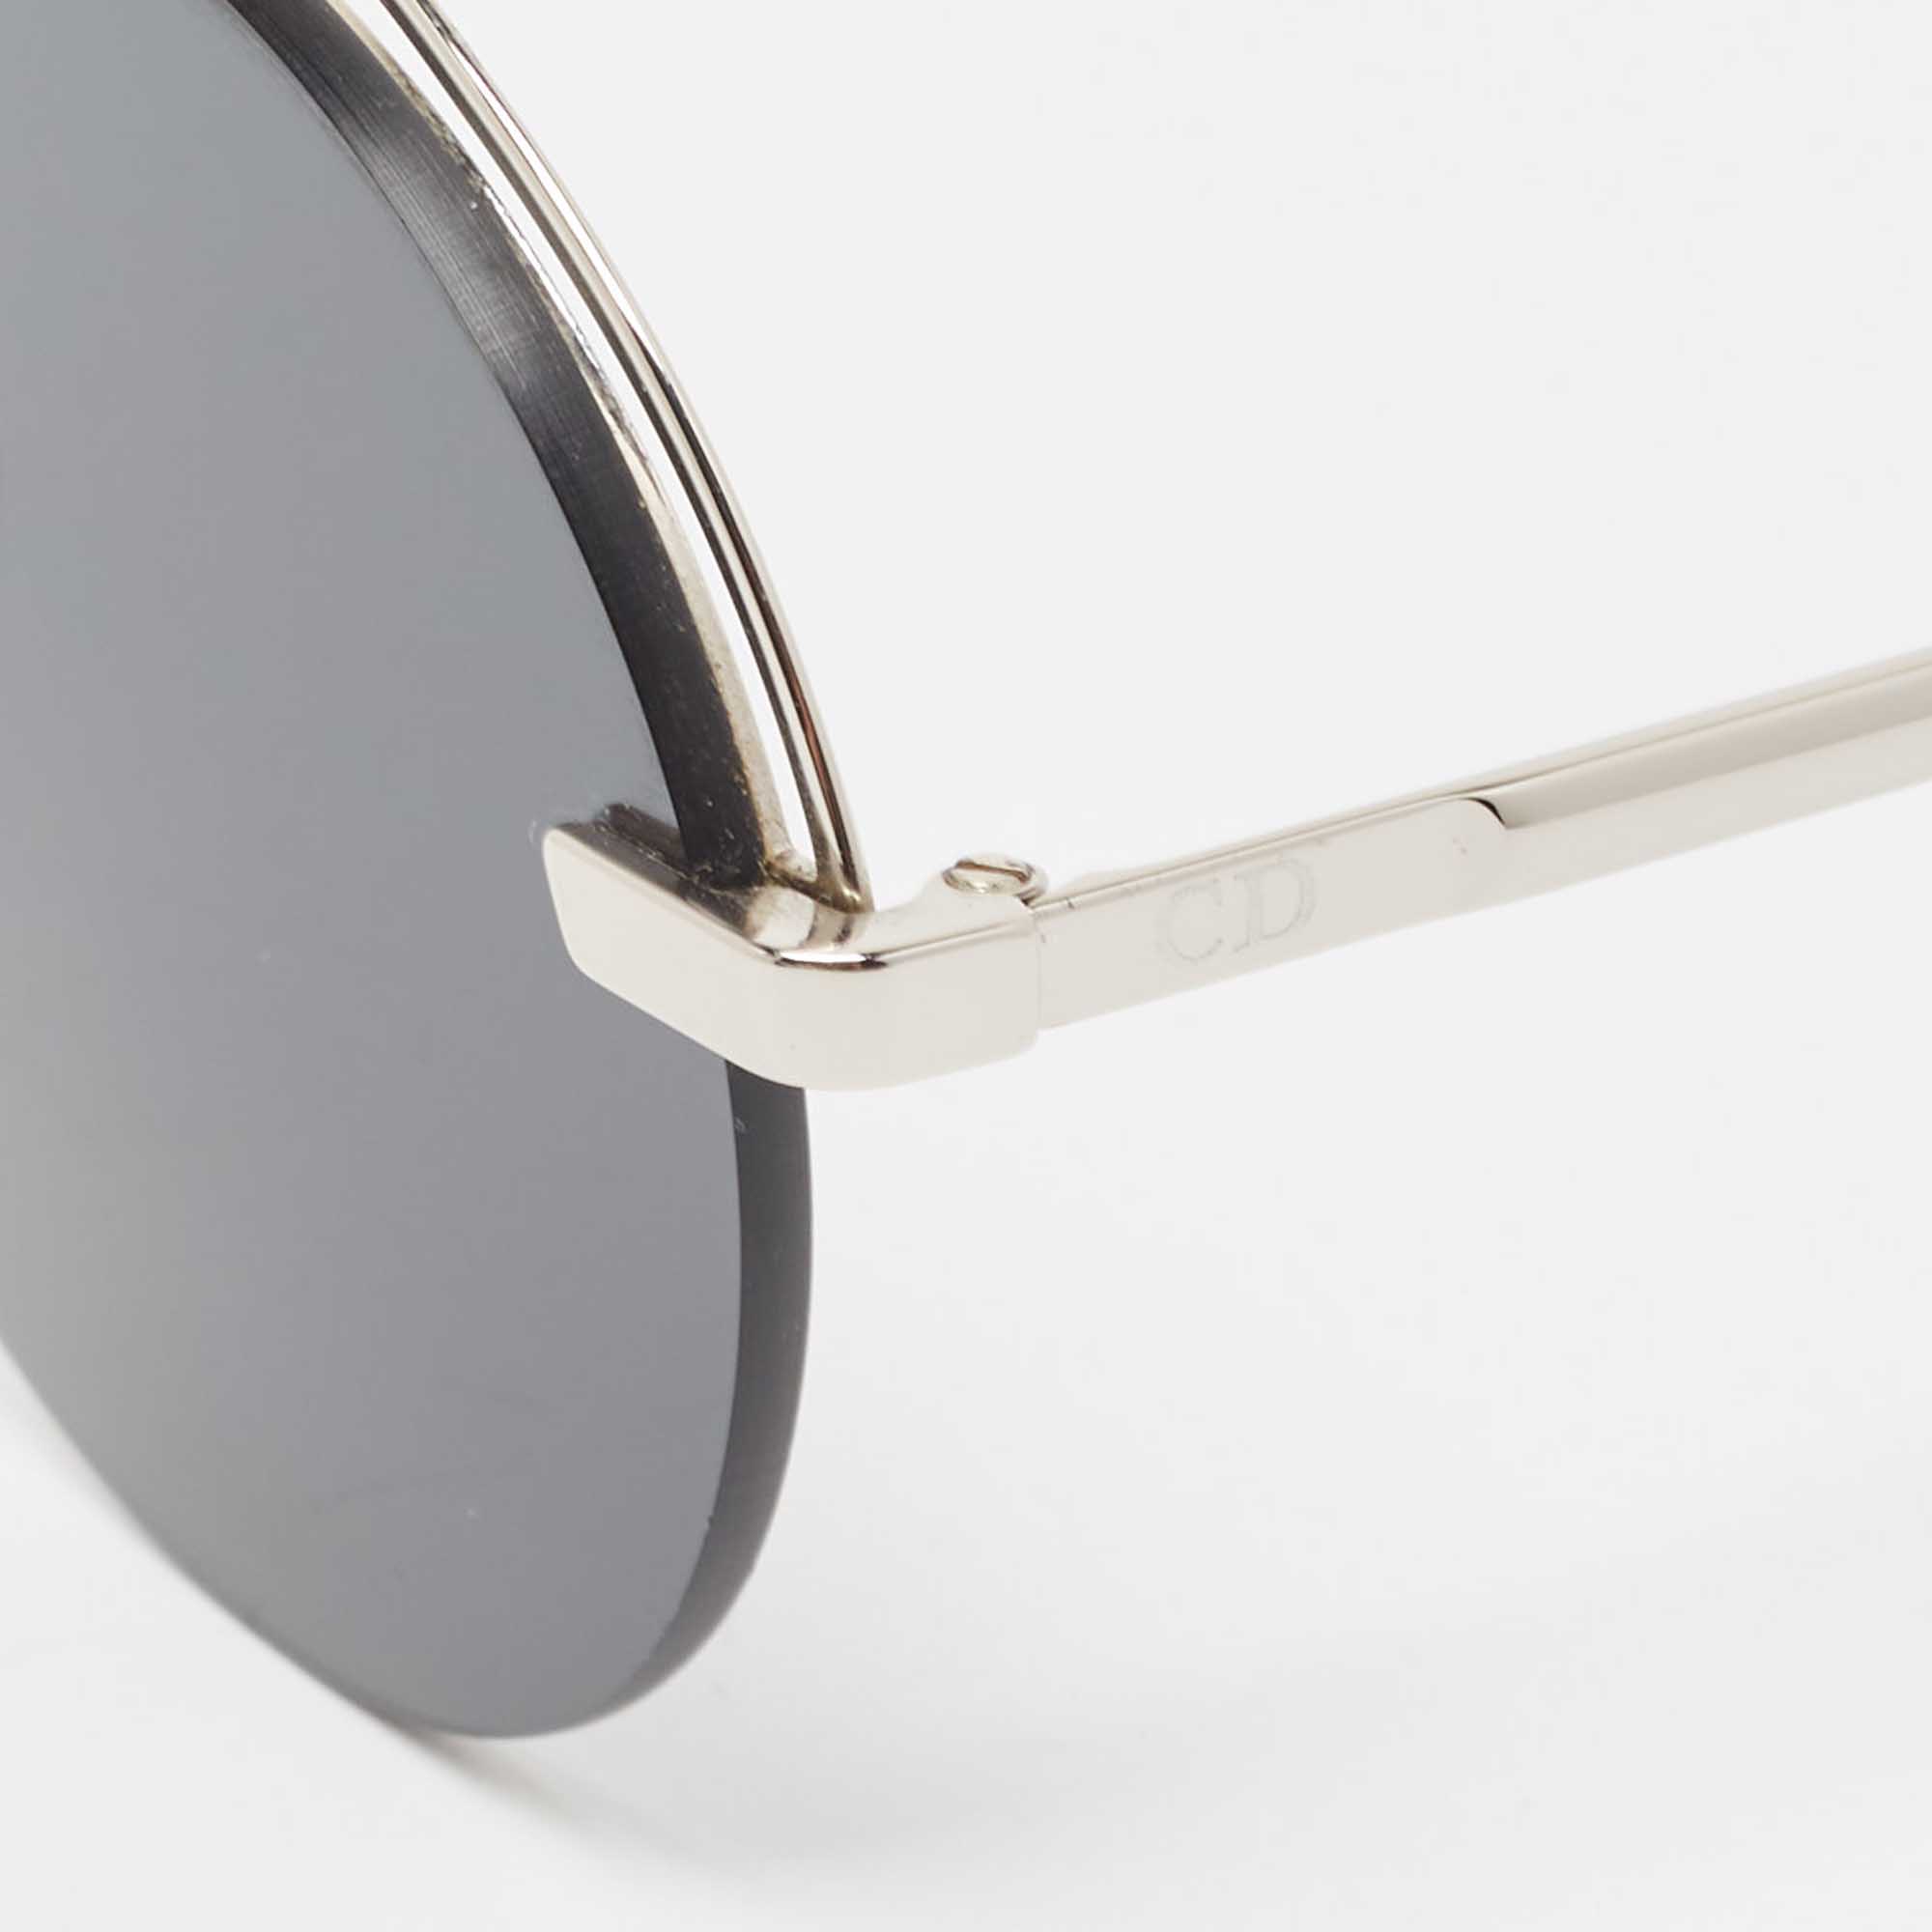 Dior Black/Silver Diorevolution Pilot Aviator Sunglasses